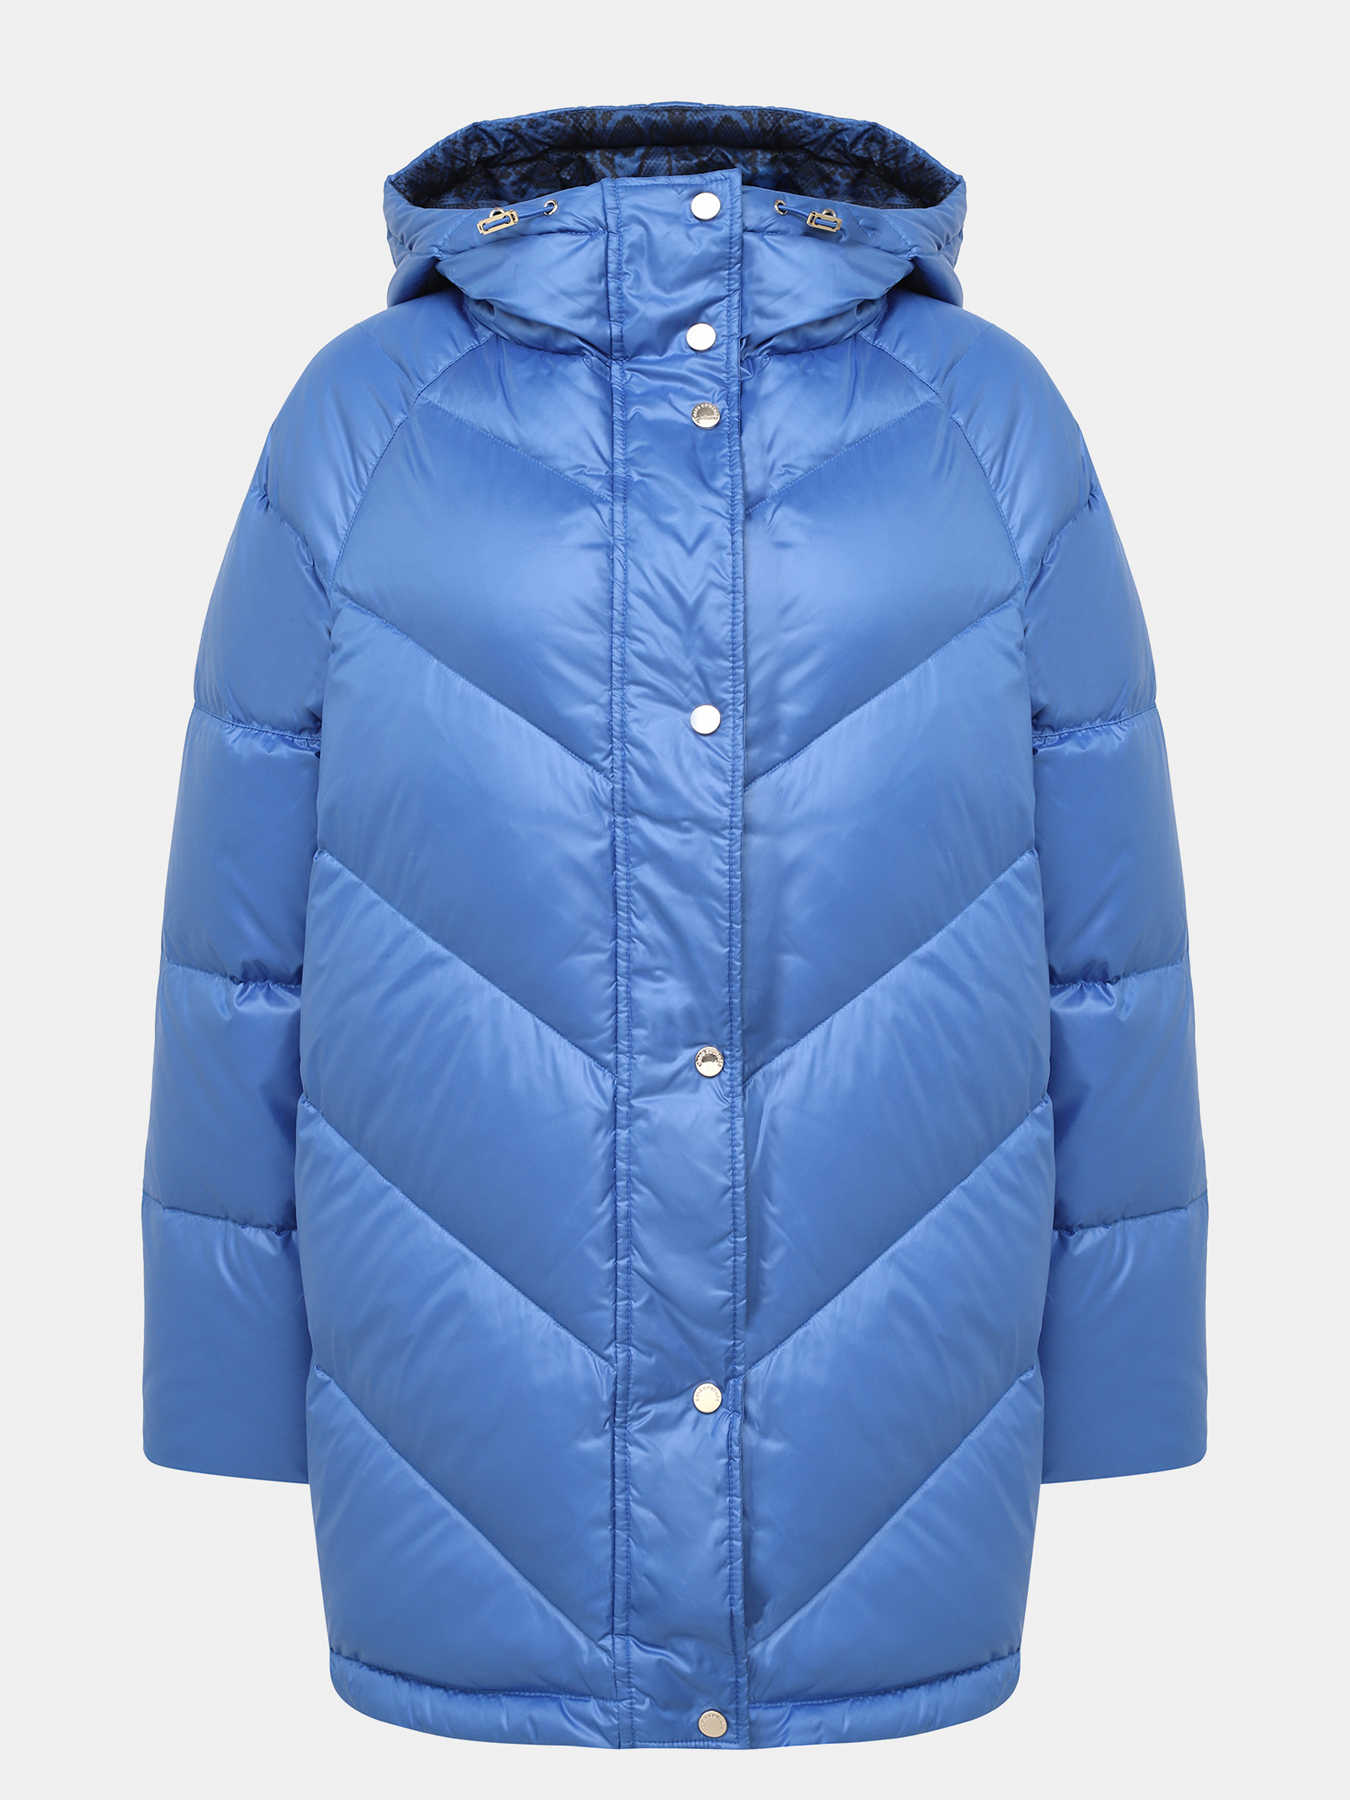 Куртка ORSA Couture 367408-024, цвет синий, размер 48 - фото 1